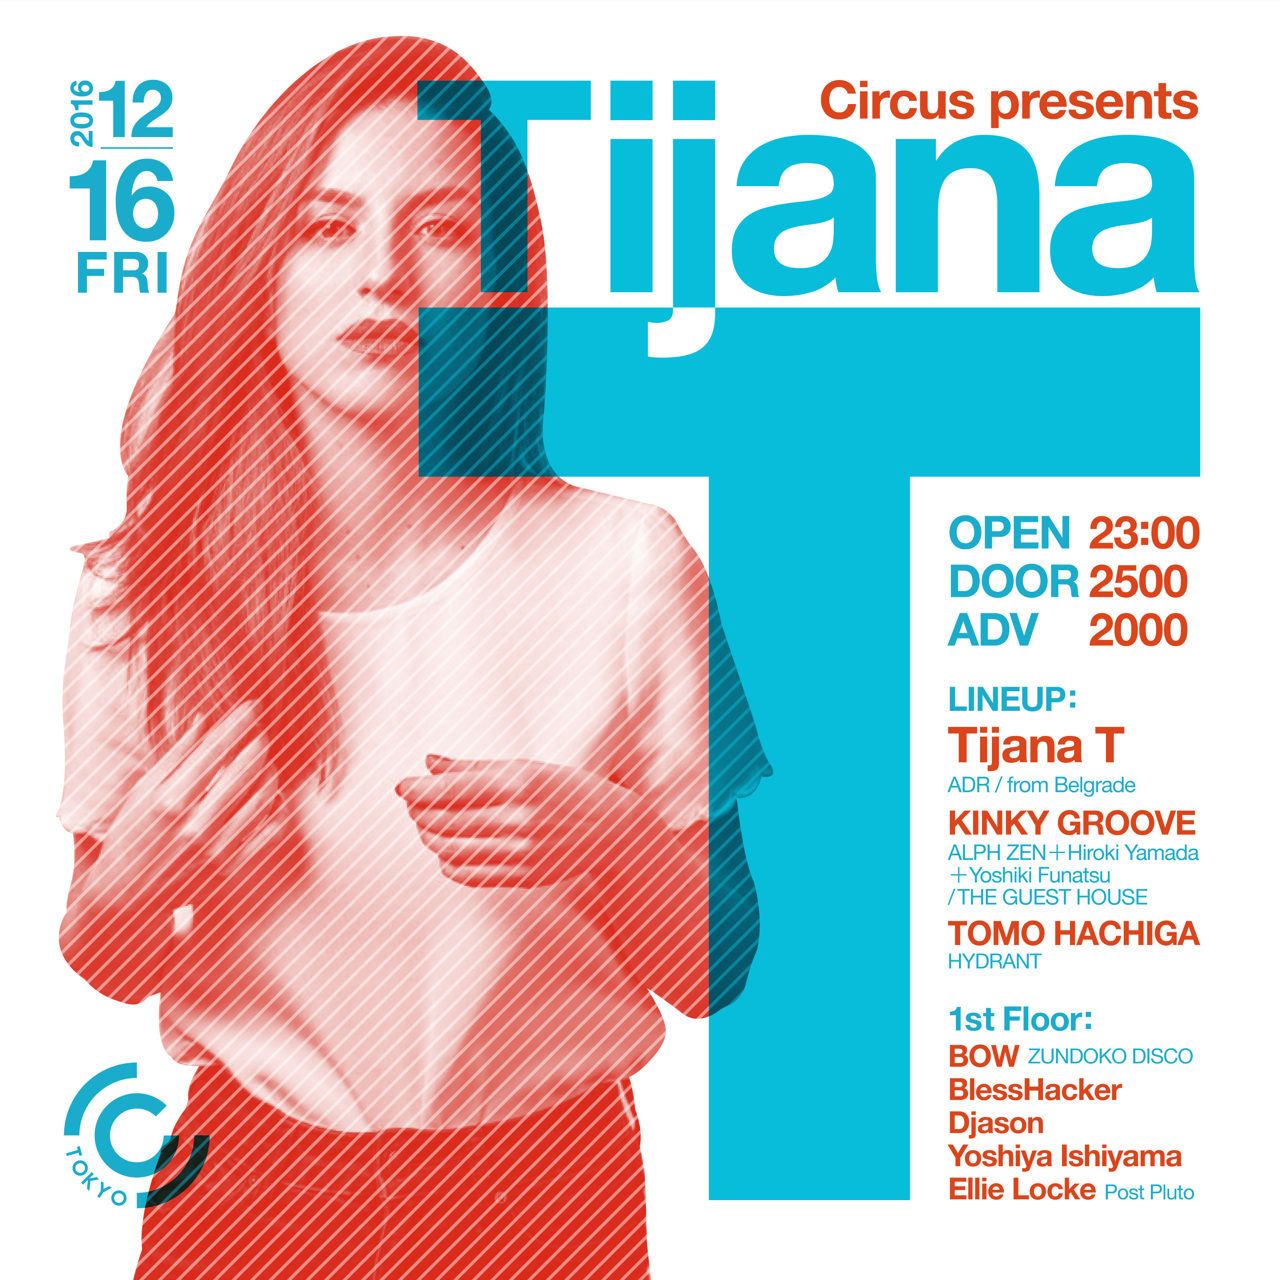 Circus presents Tijana T